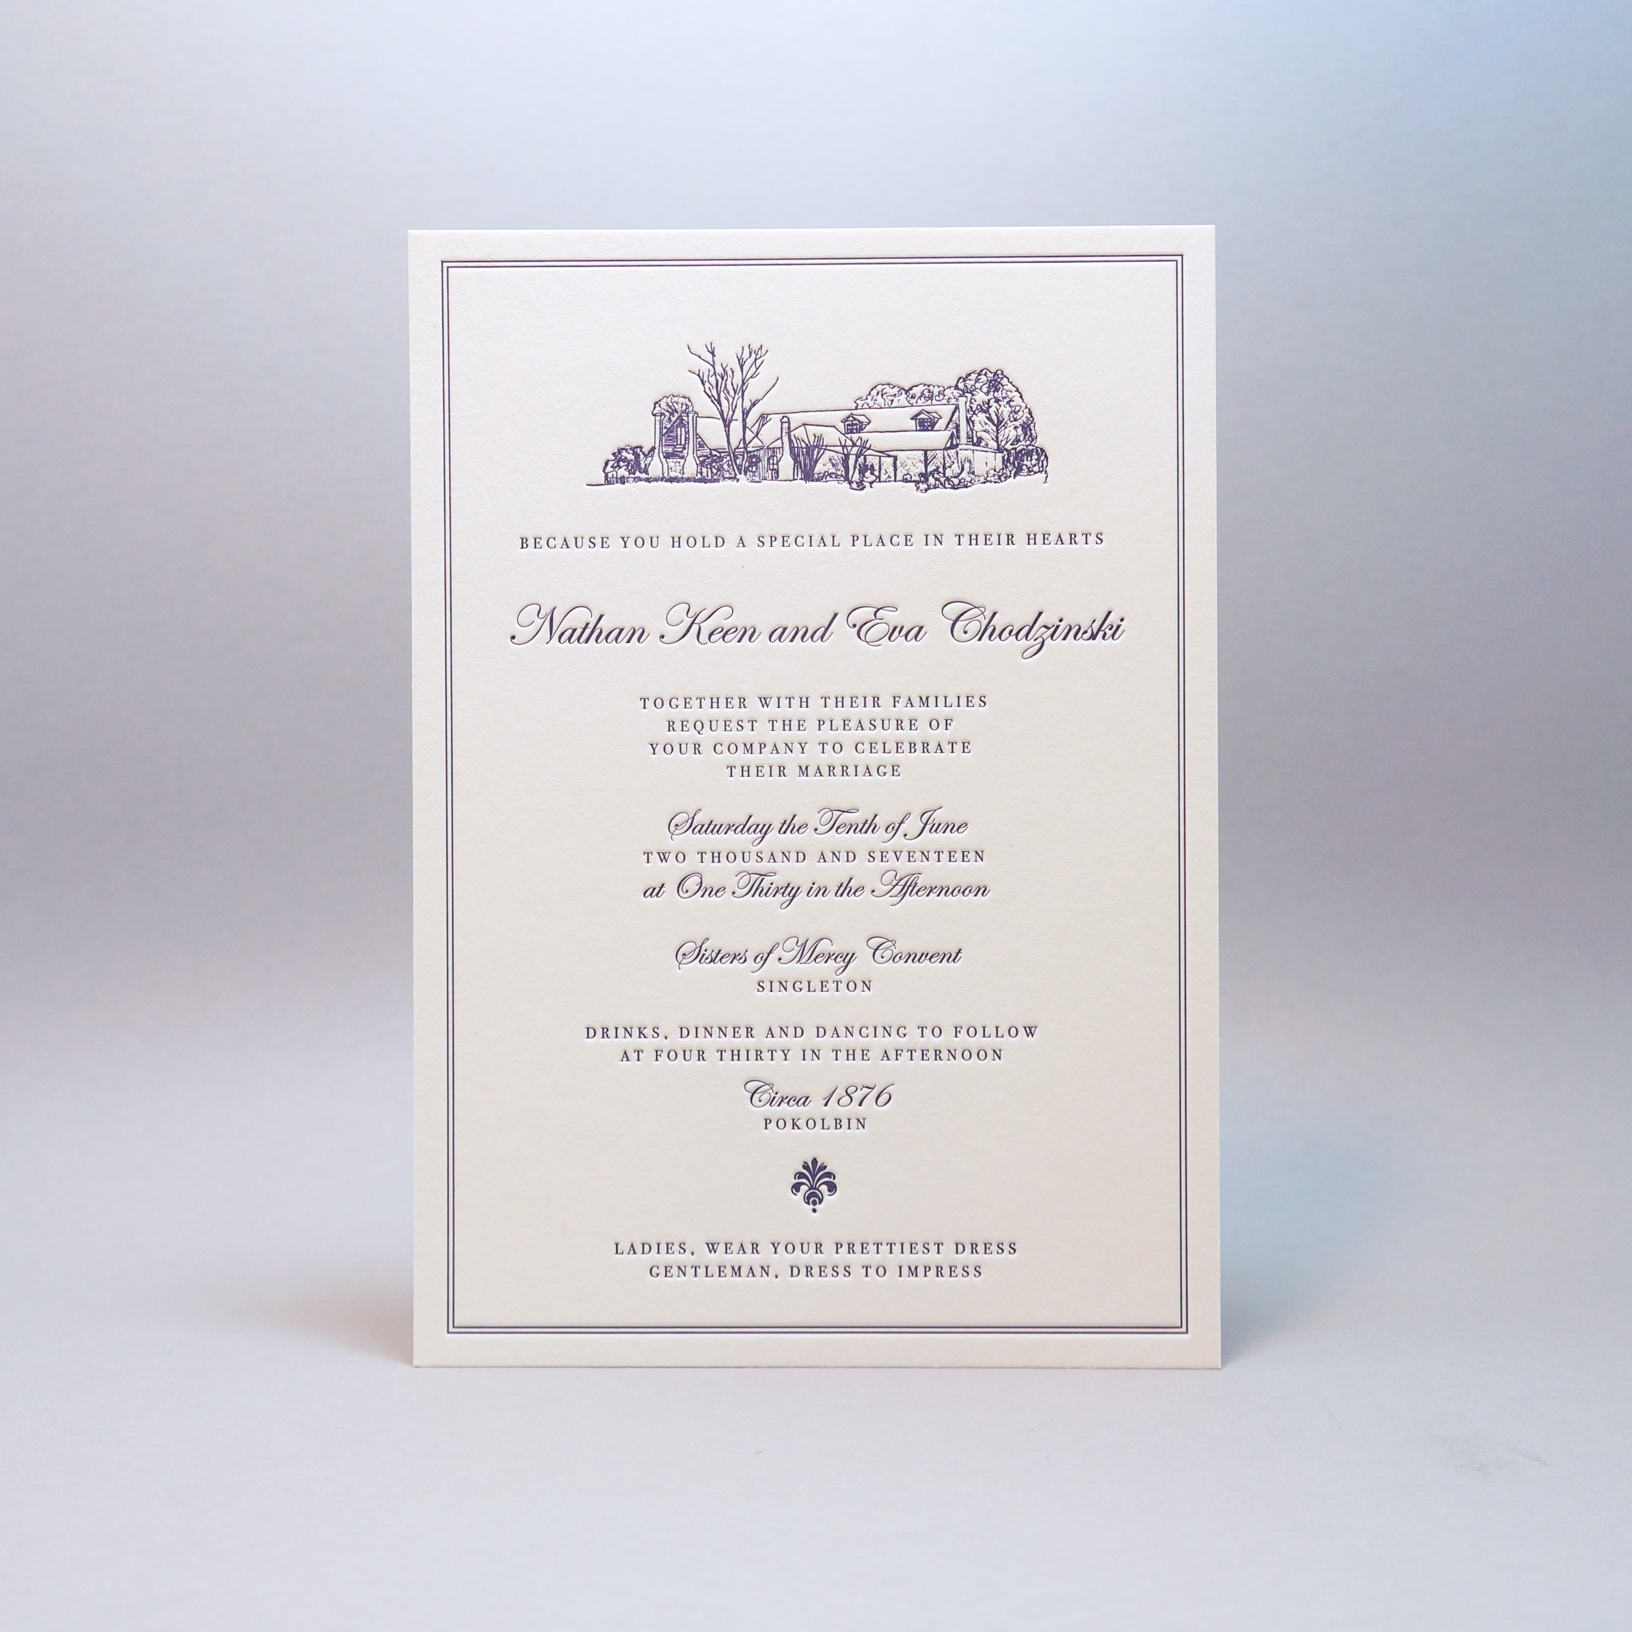 Letterpress-wedding-invitations-purple-crane-lettra-illustration